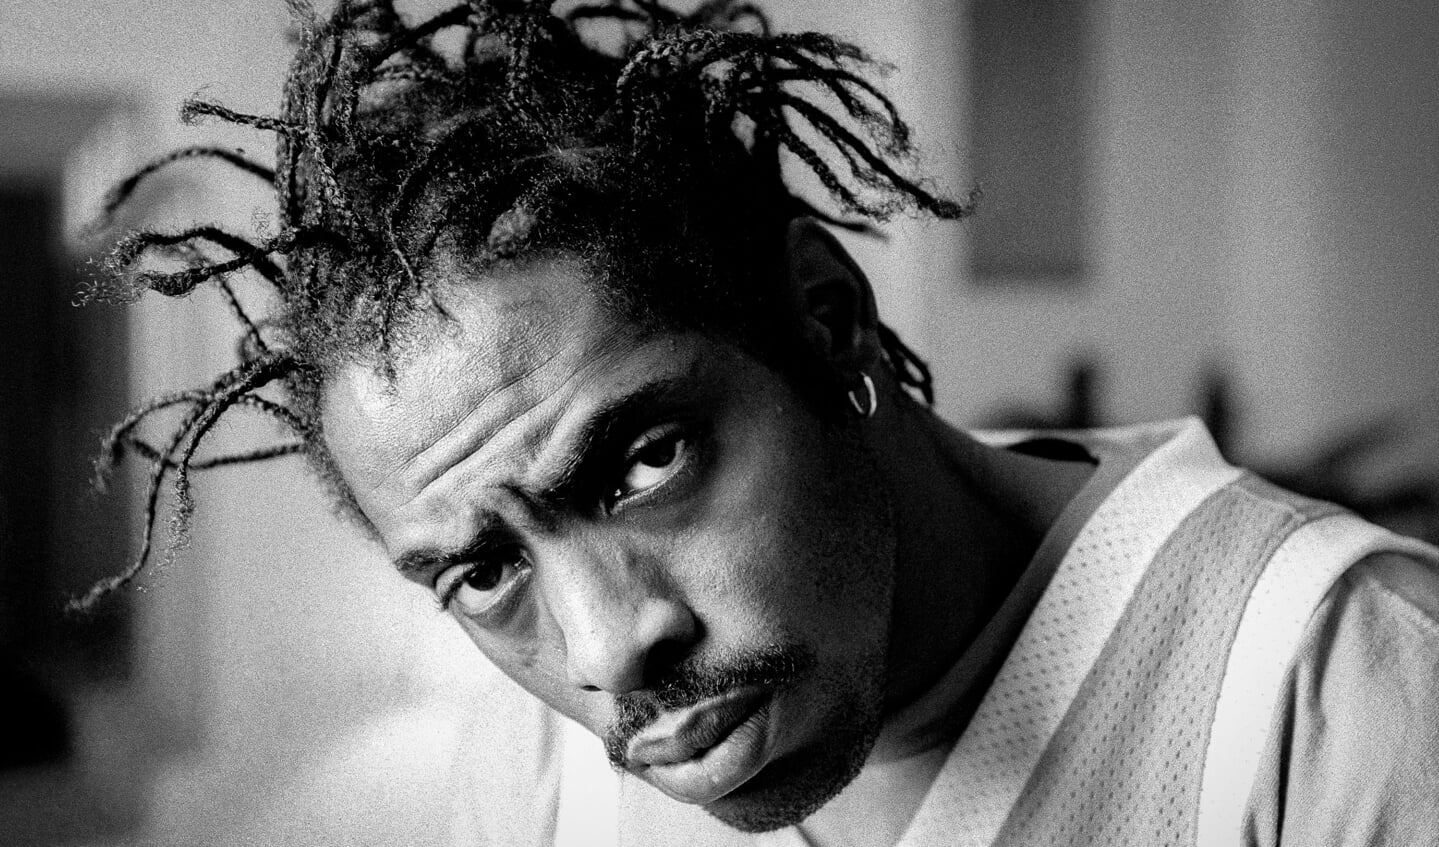 3-11-1995 Amsterdam, Nederland. Portret van de Amerikaanse rapper, acteur en platenproducer Coolio (Artis Ivey). Foto: Paul Bergen